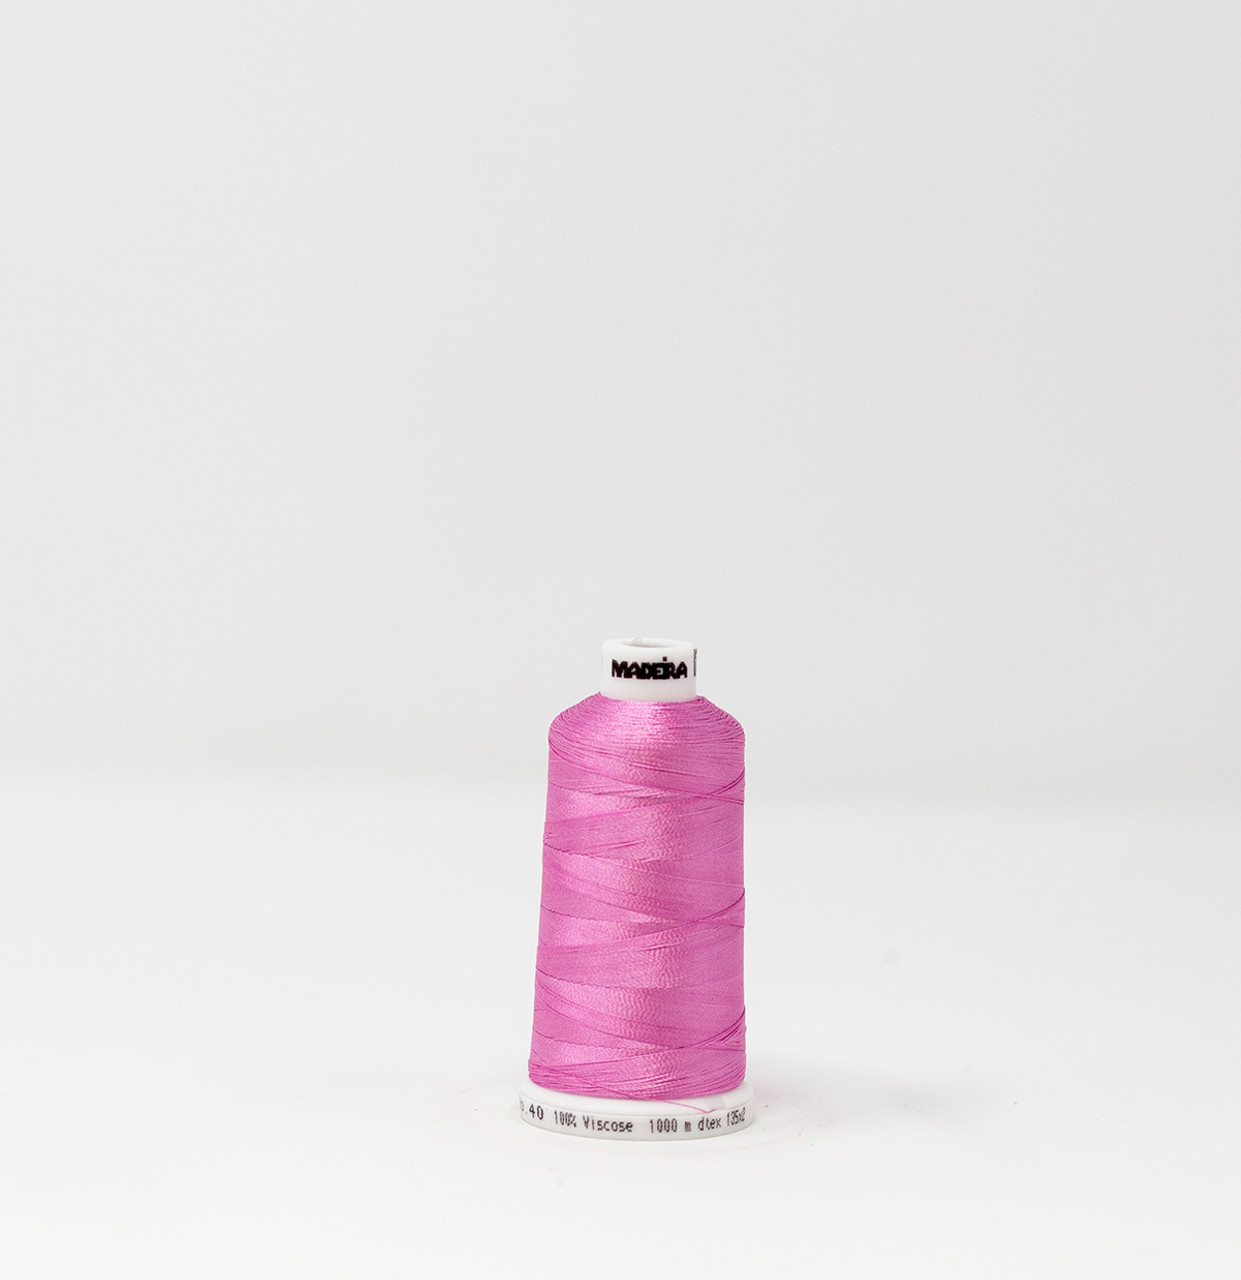 Madeira, Classic, Rayon Thread, 911-1321 Spool(Bubble Gum Pink)